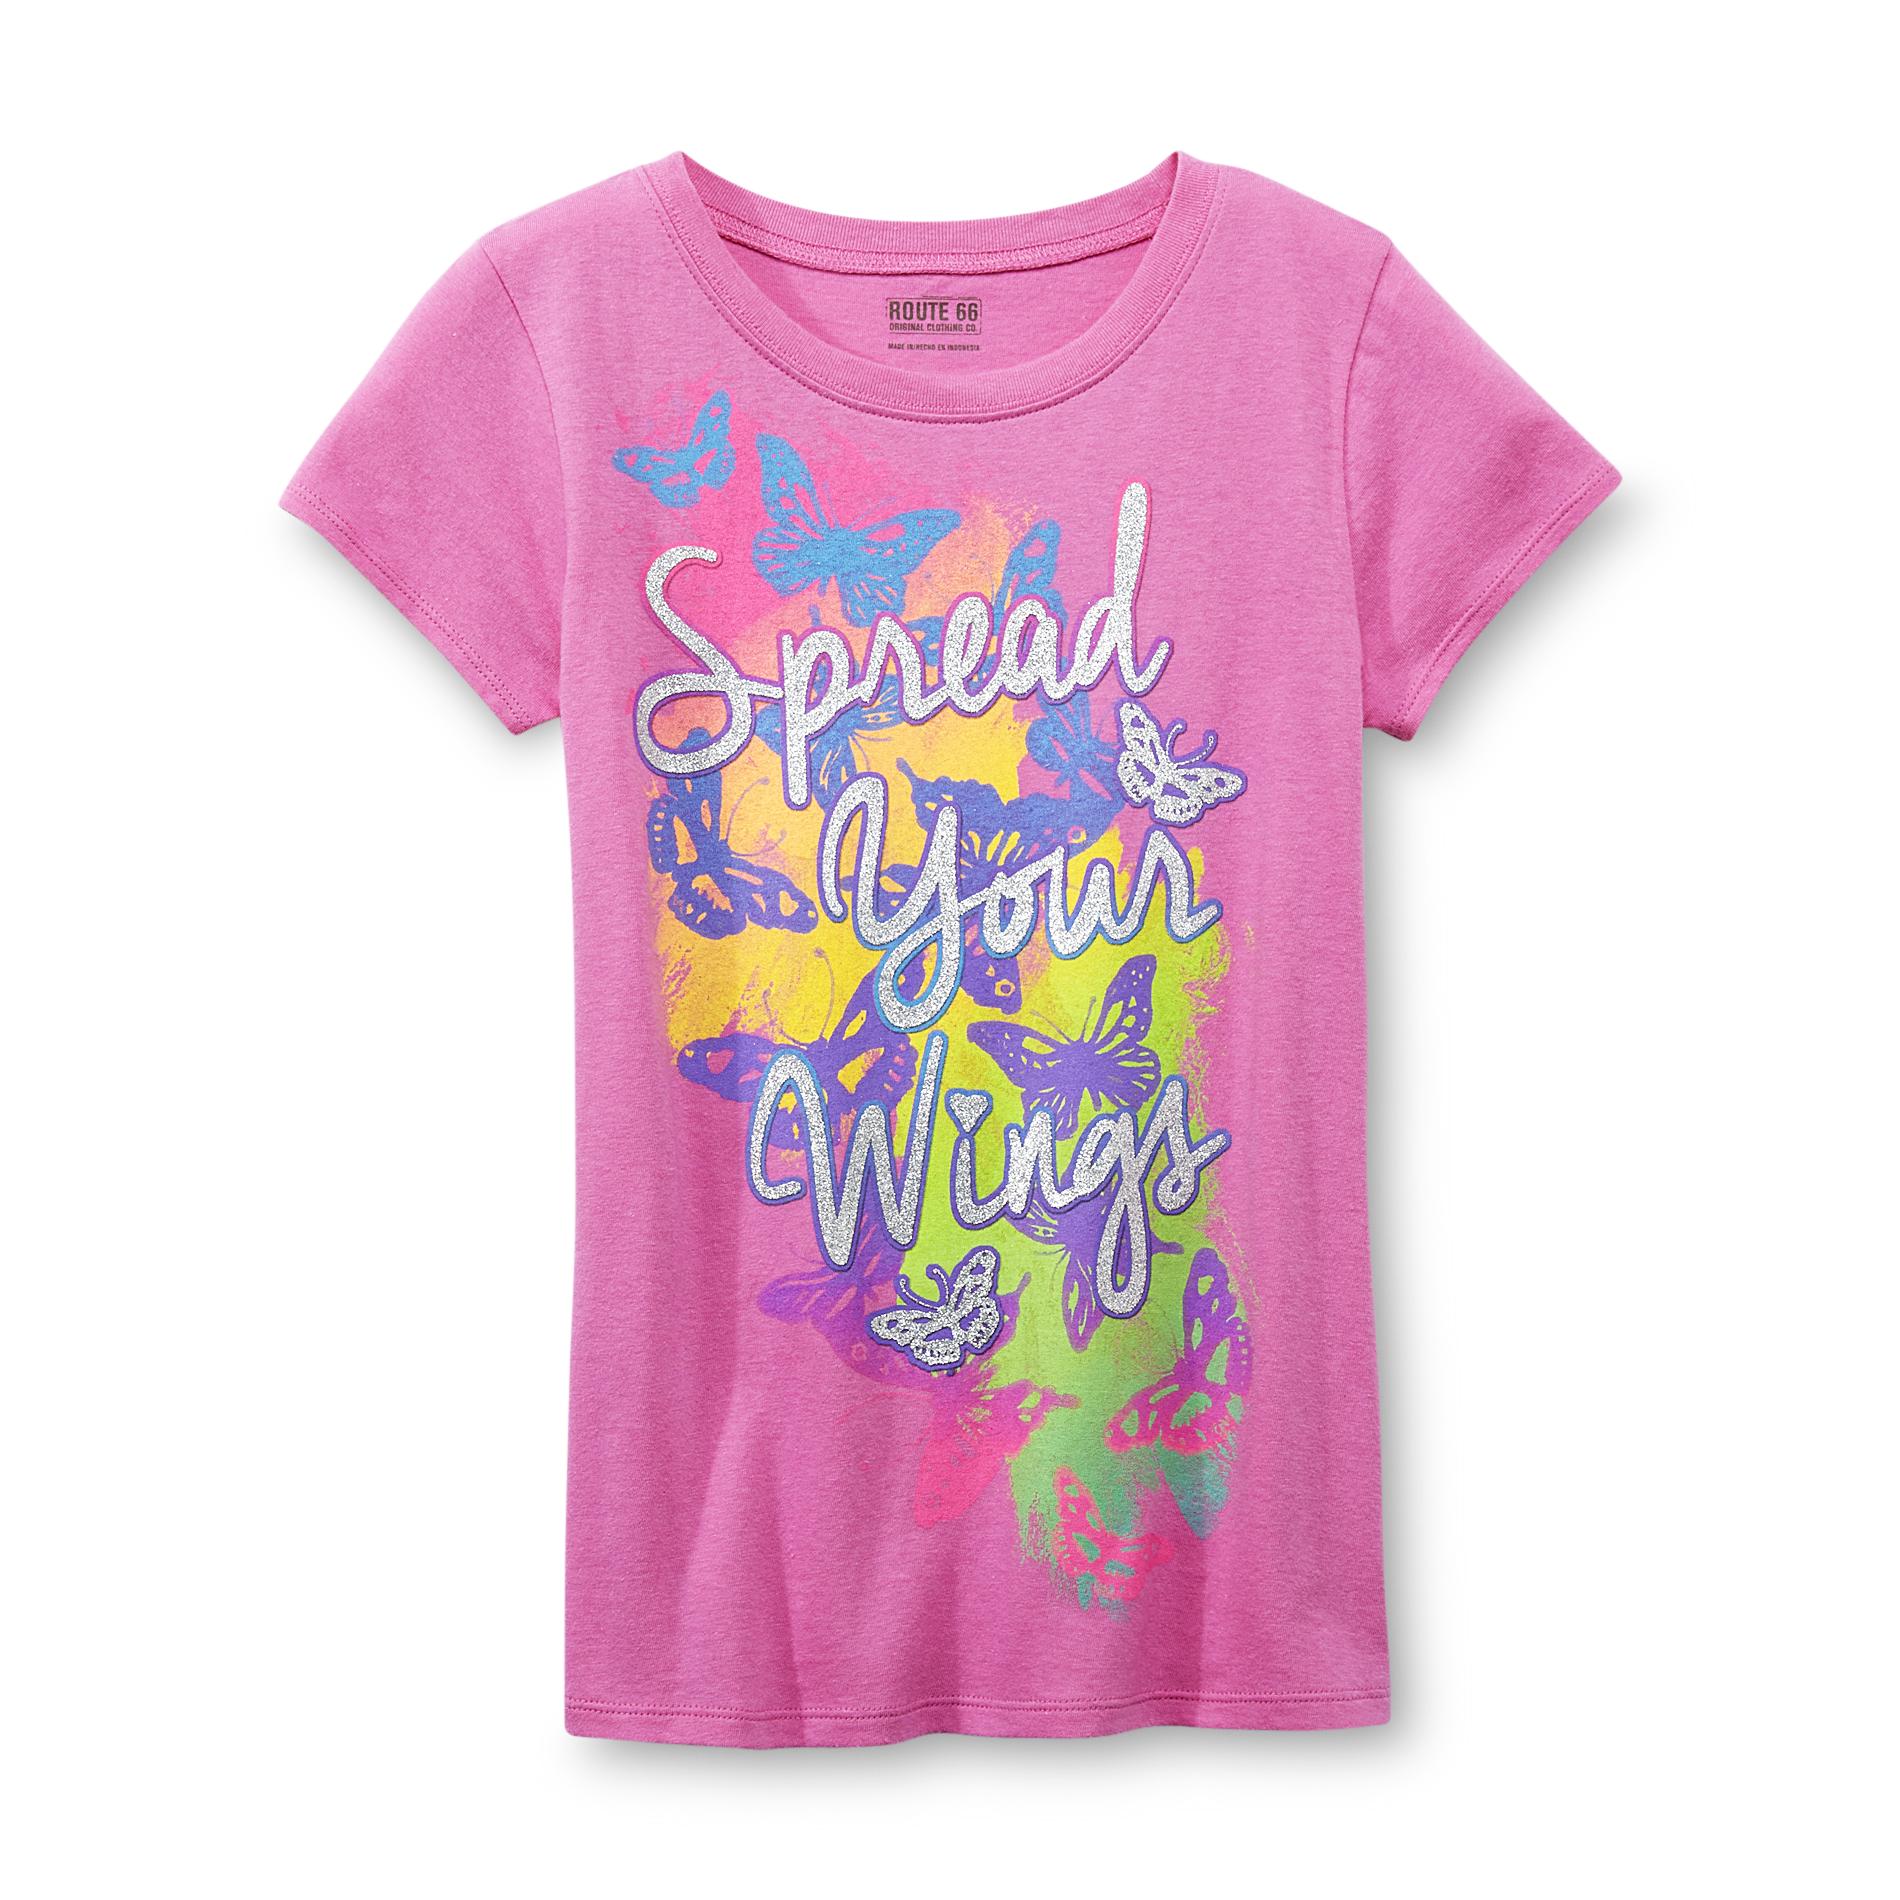 Route 66 Girl's Graphic T-Shirt - Butterflies